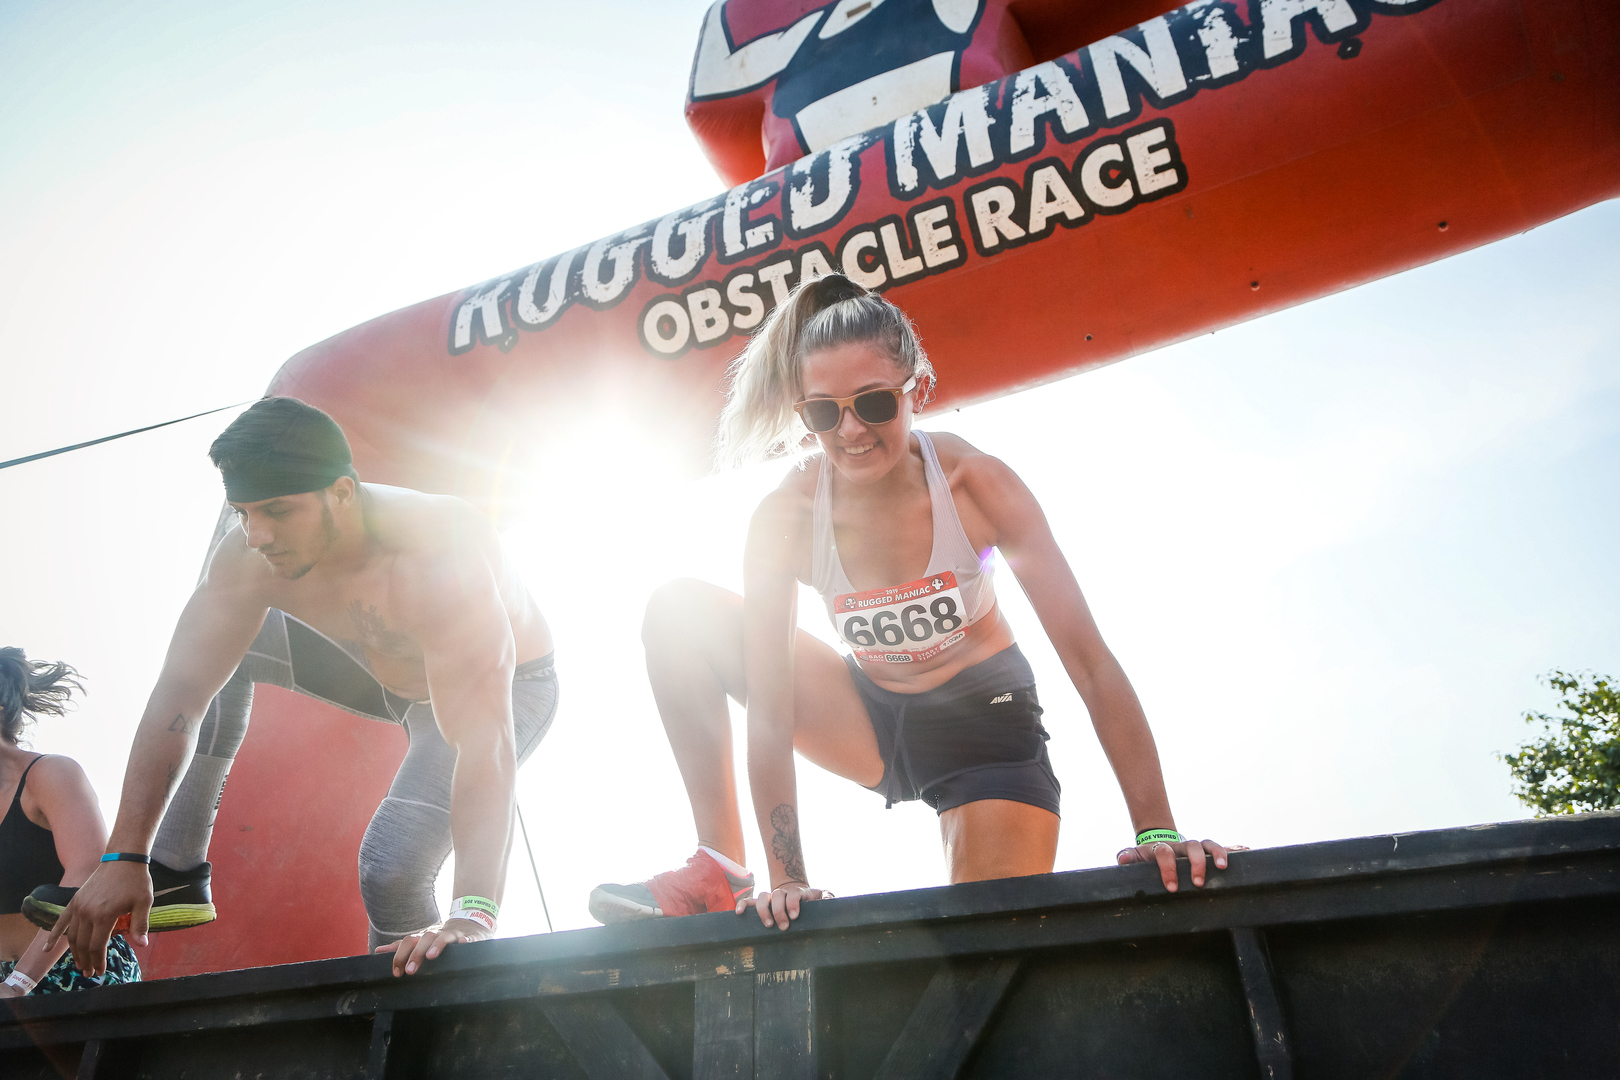 Rugged Maniac 5k Obstacle Race - San Francisco, Pleasanton, California, United States